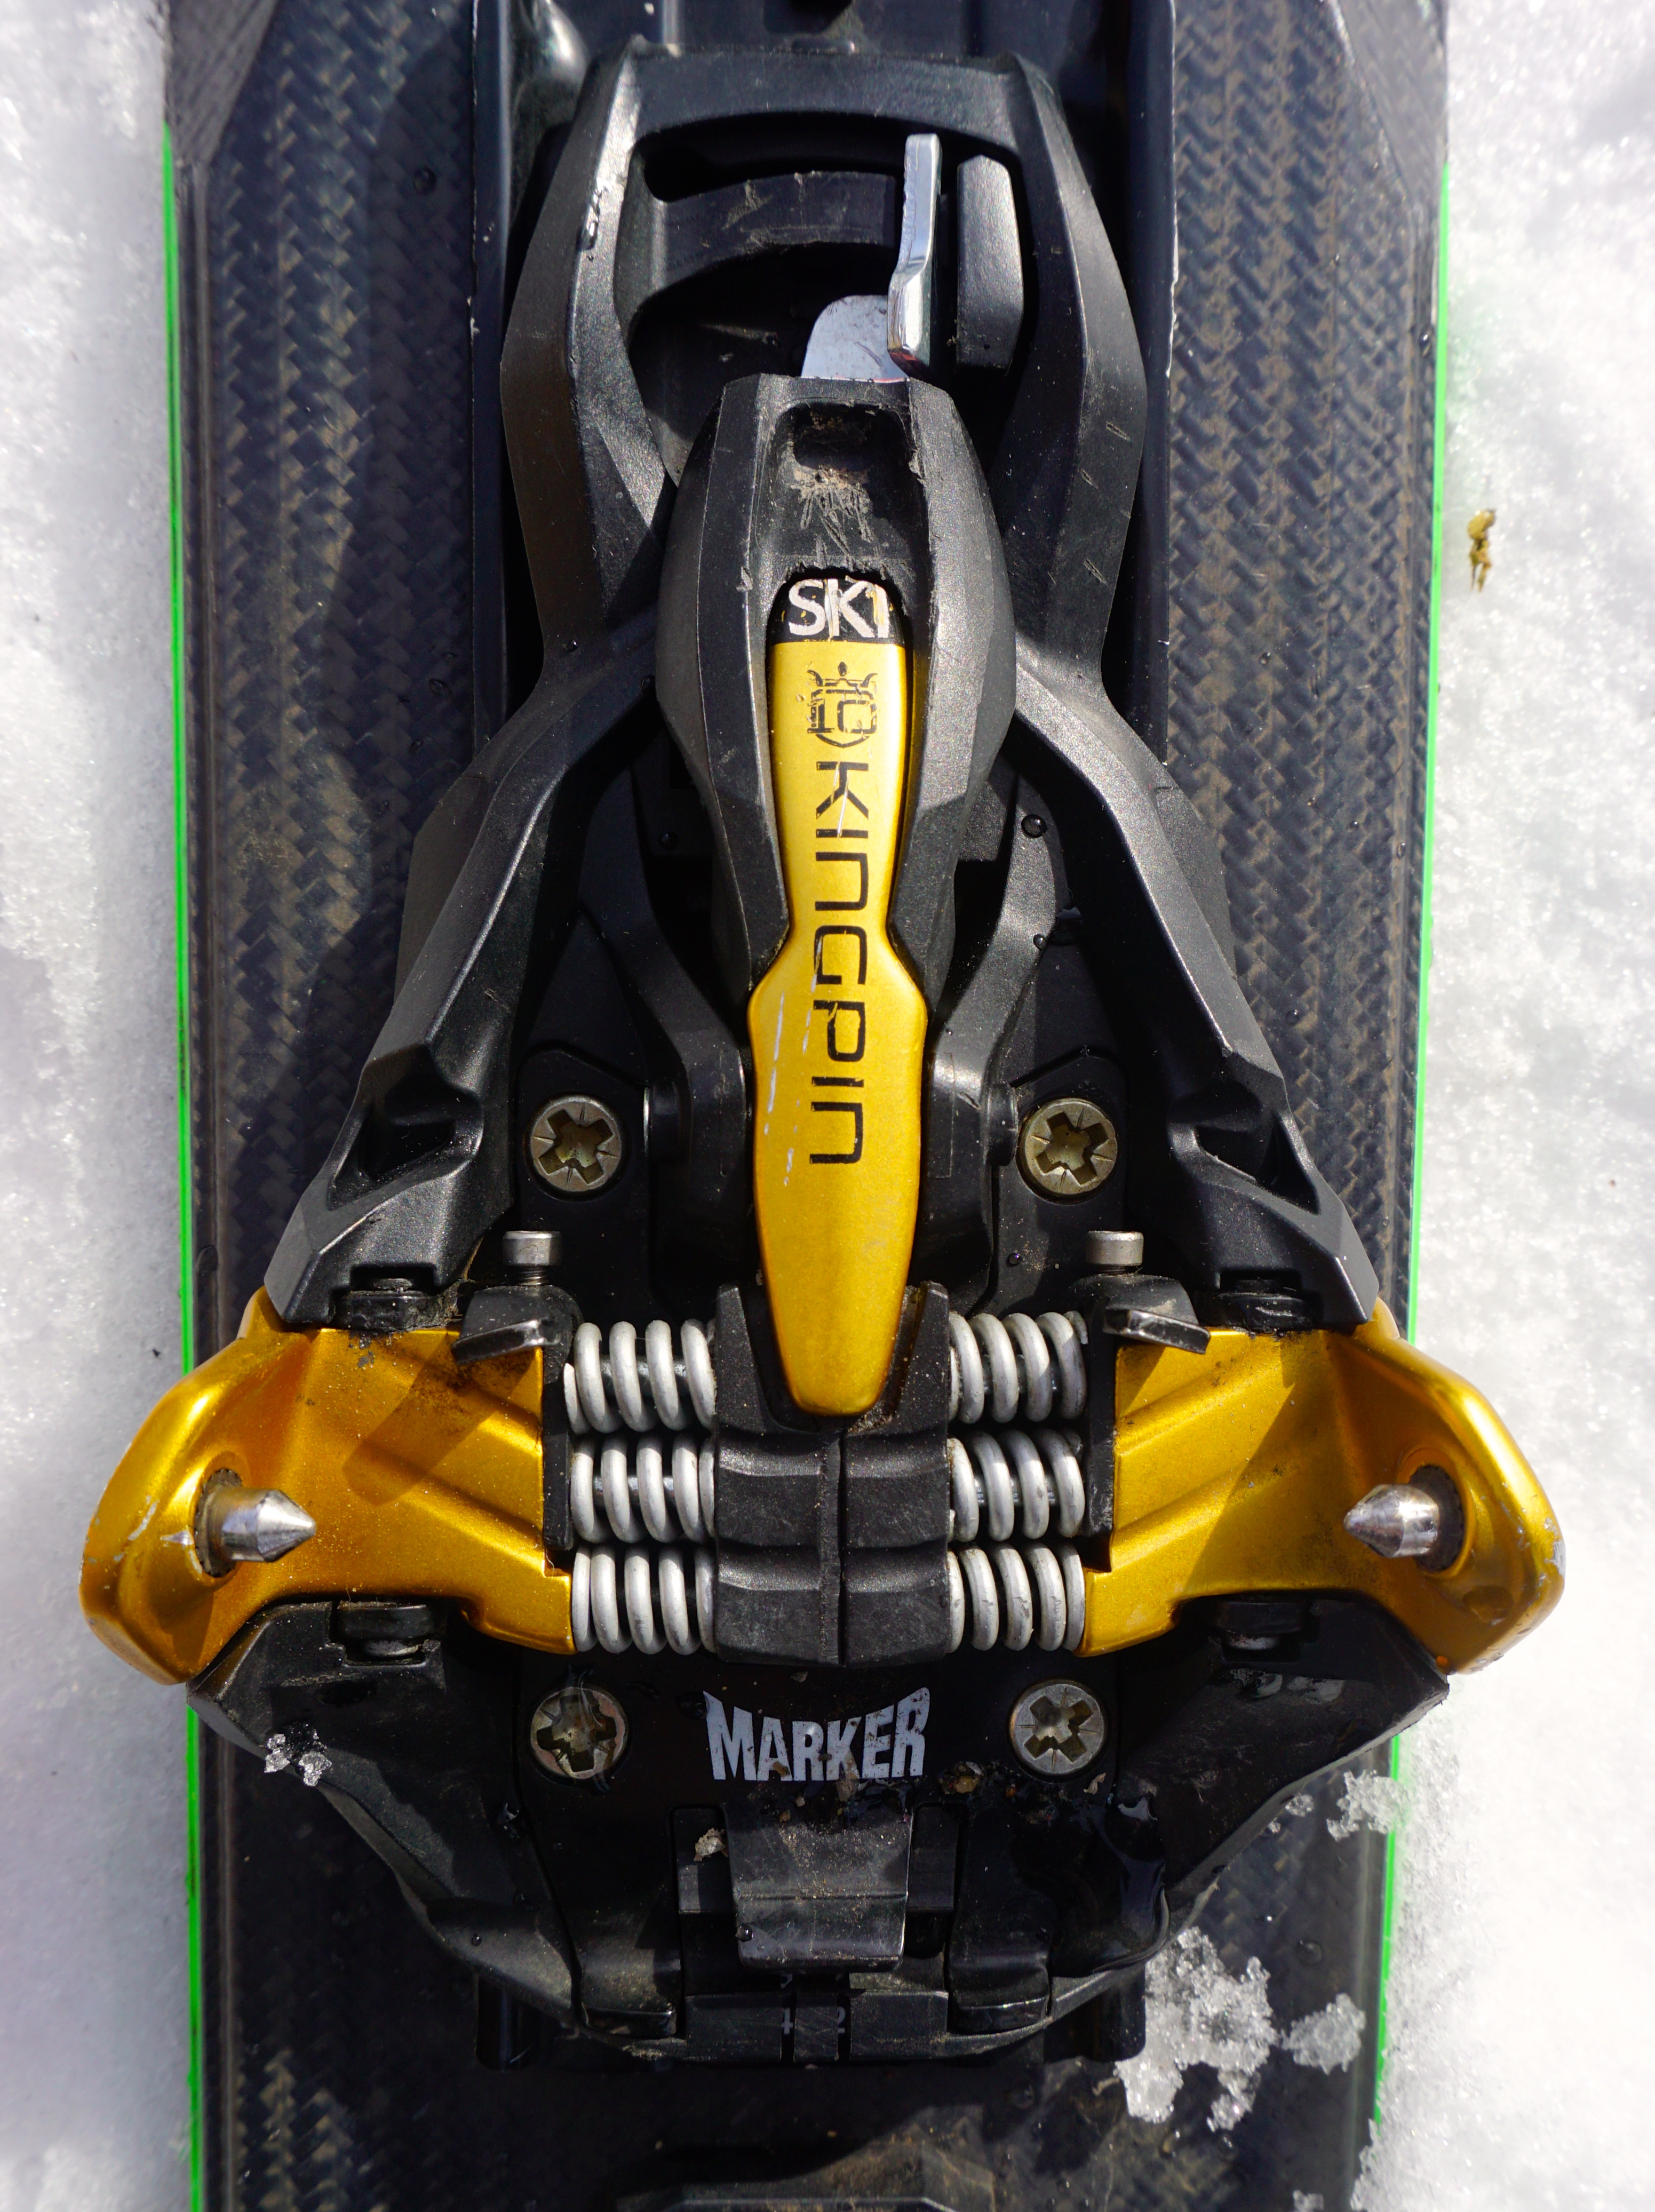 Gear Review: Marker Kingpin Ski Binding - SnowBrains